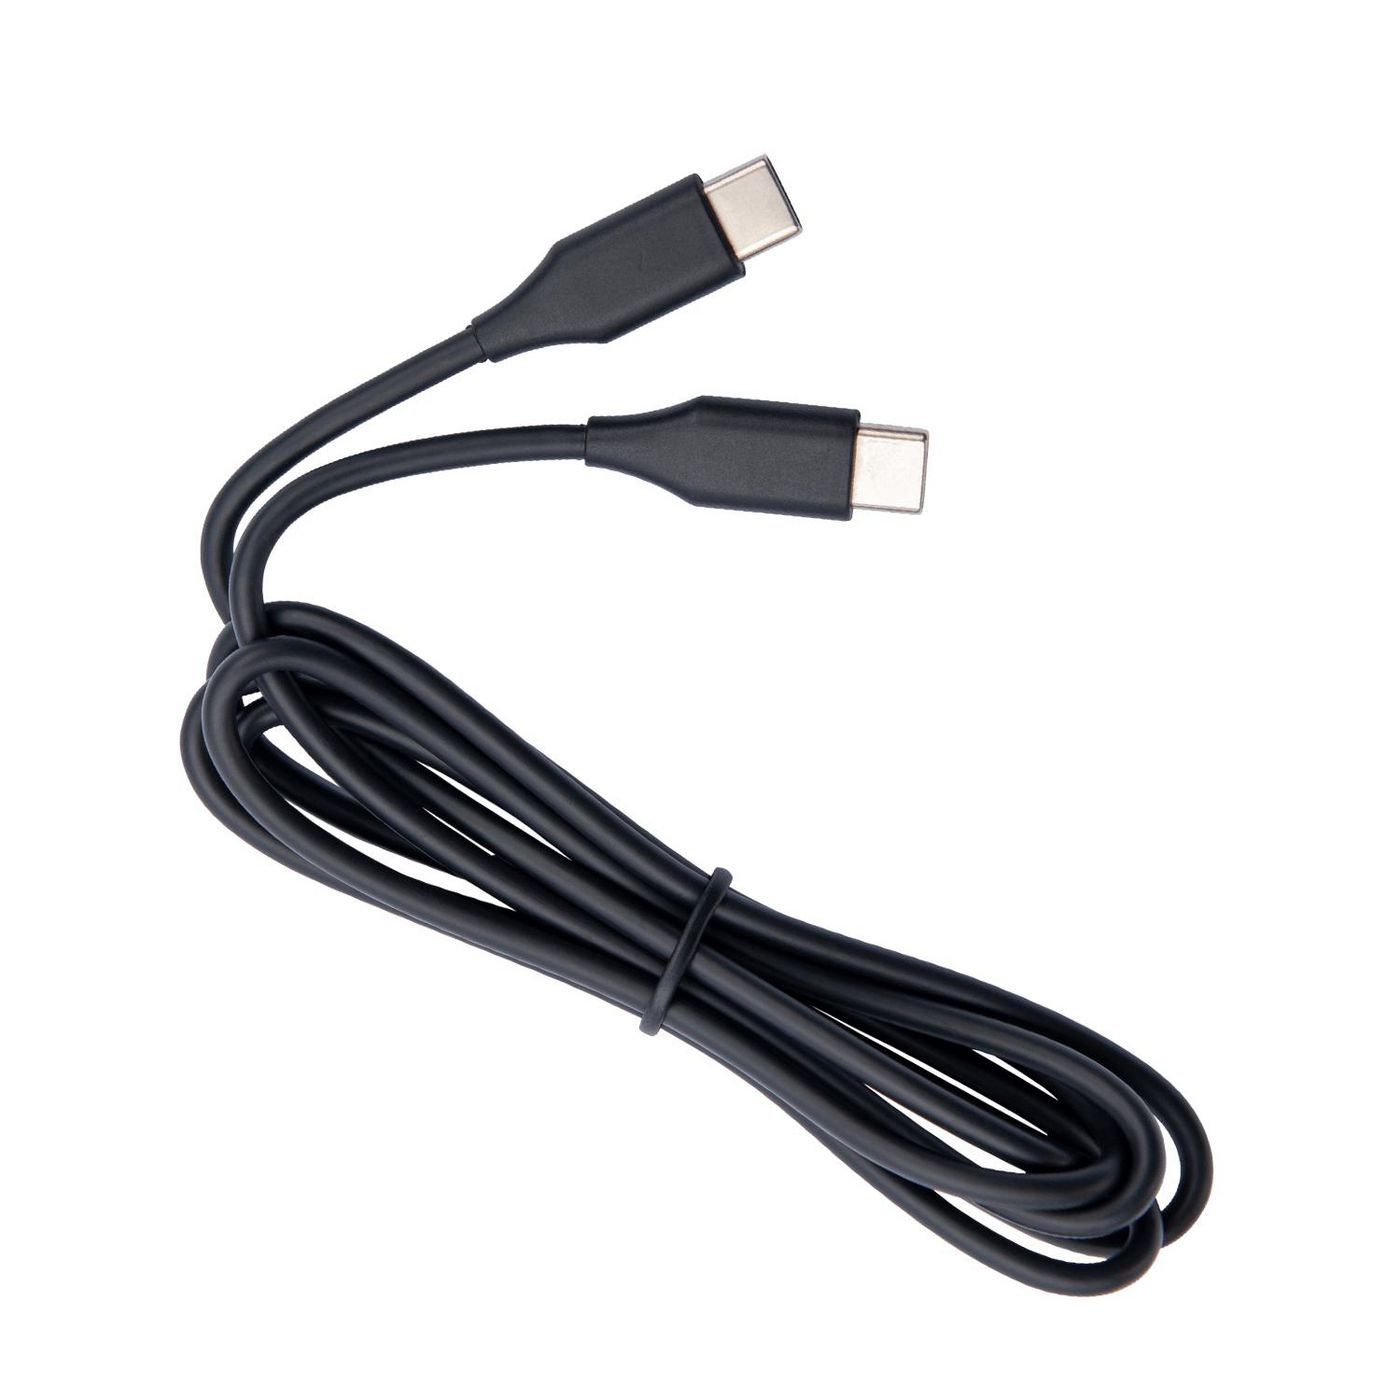 Jabra 14208-32 W125767650 Evolve2 USB Cable, USB-C to 